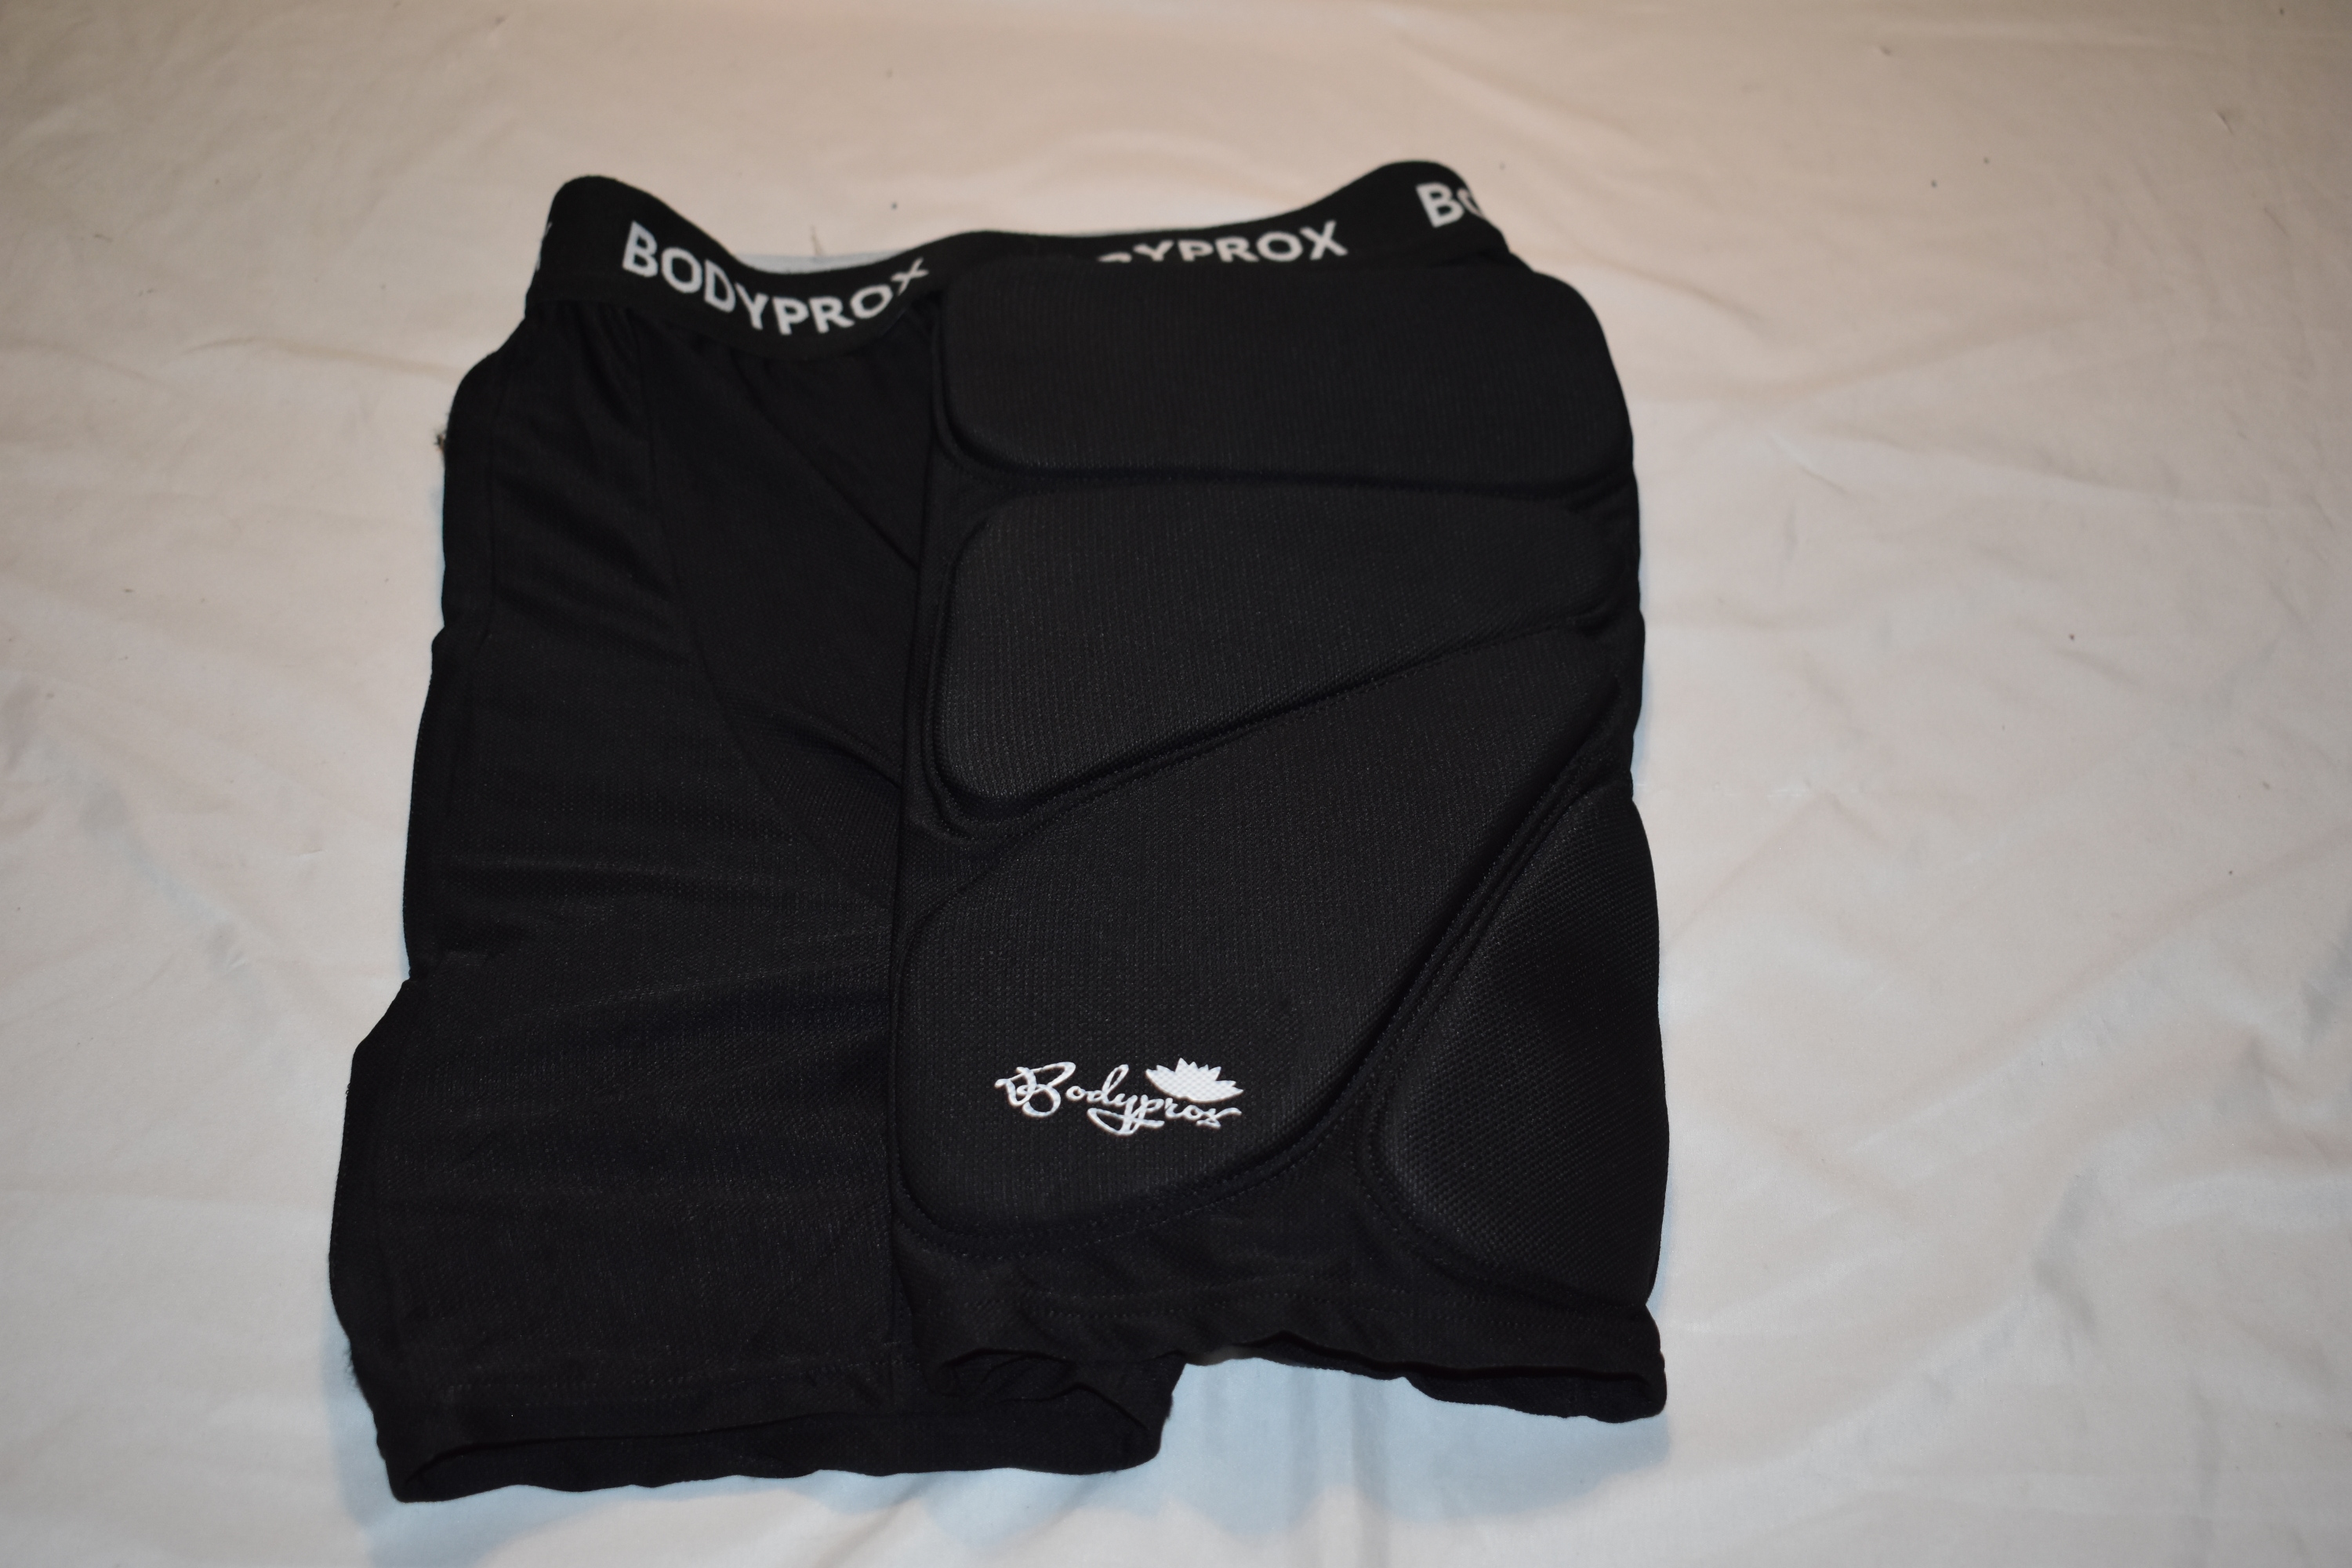 BodyProx Multi Sport 9 Pad Impact Protection Shorts, Black, Adult Large